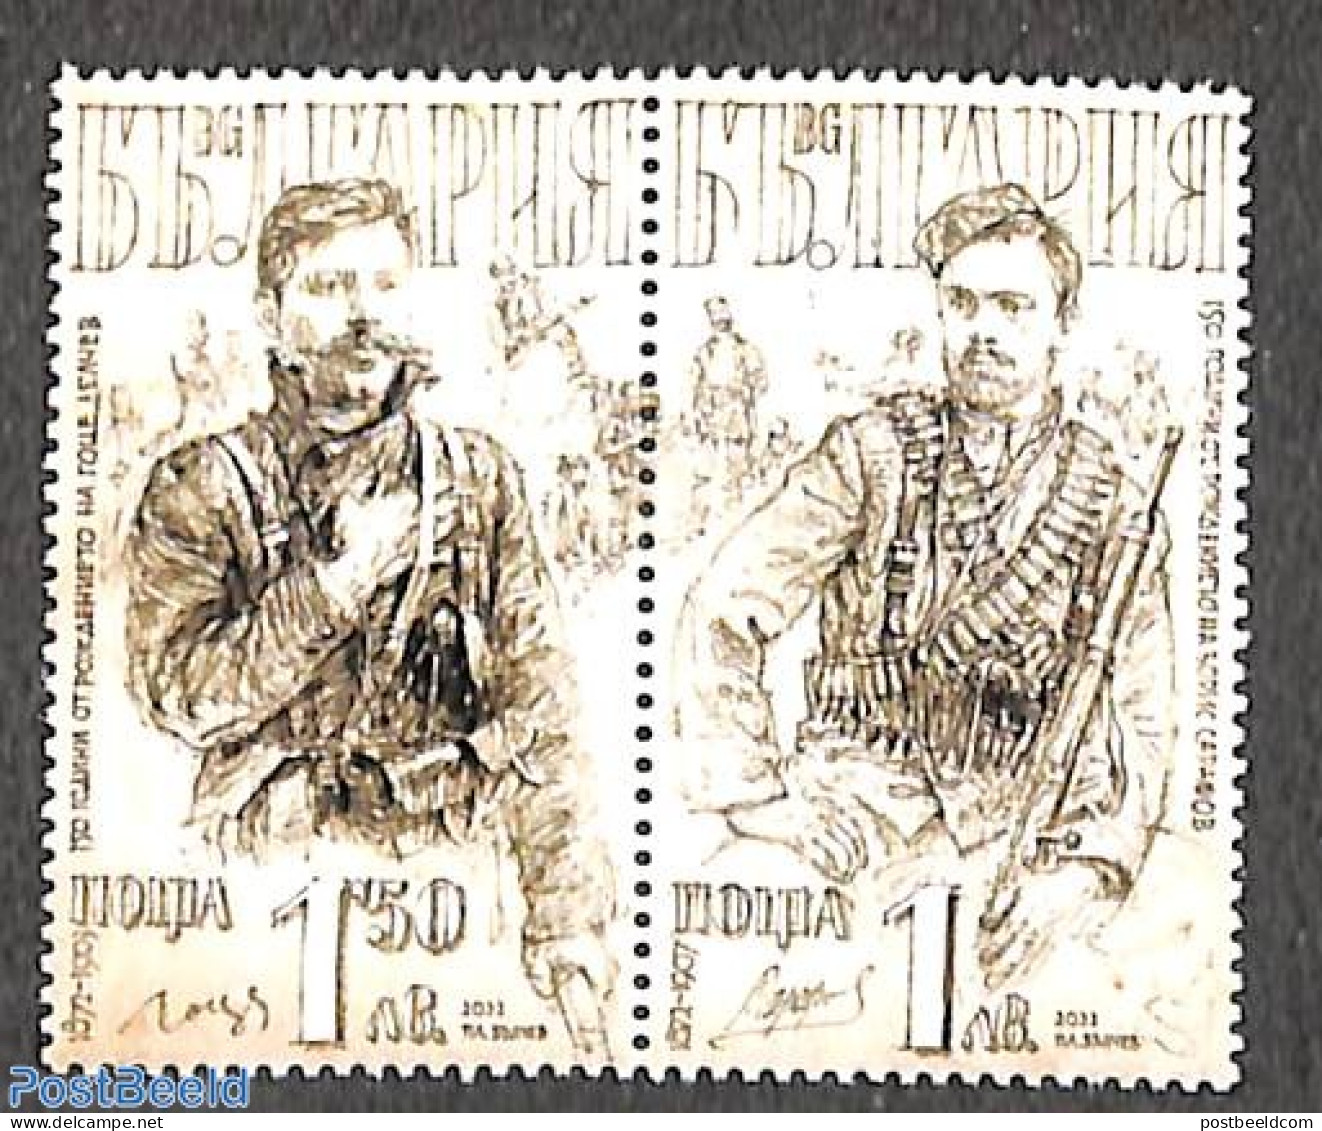 Bulgaria 2022 Deltschev/Sarafov 2v [:], Mint NH - Unused Stamps